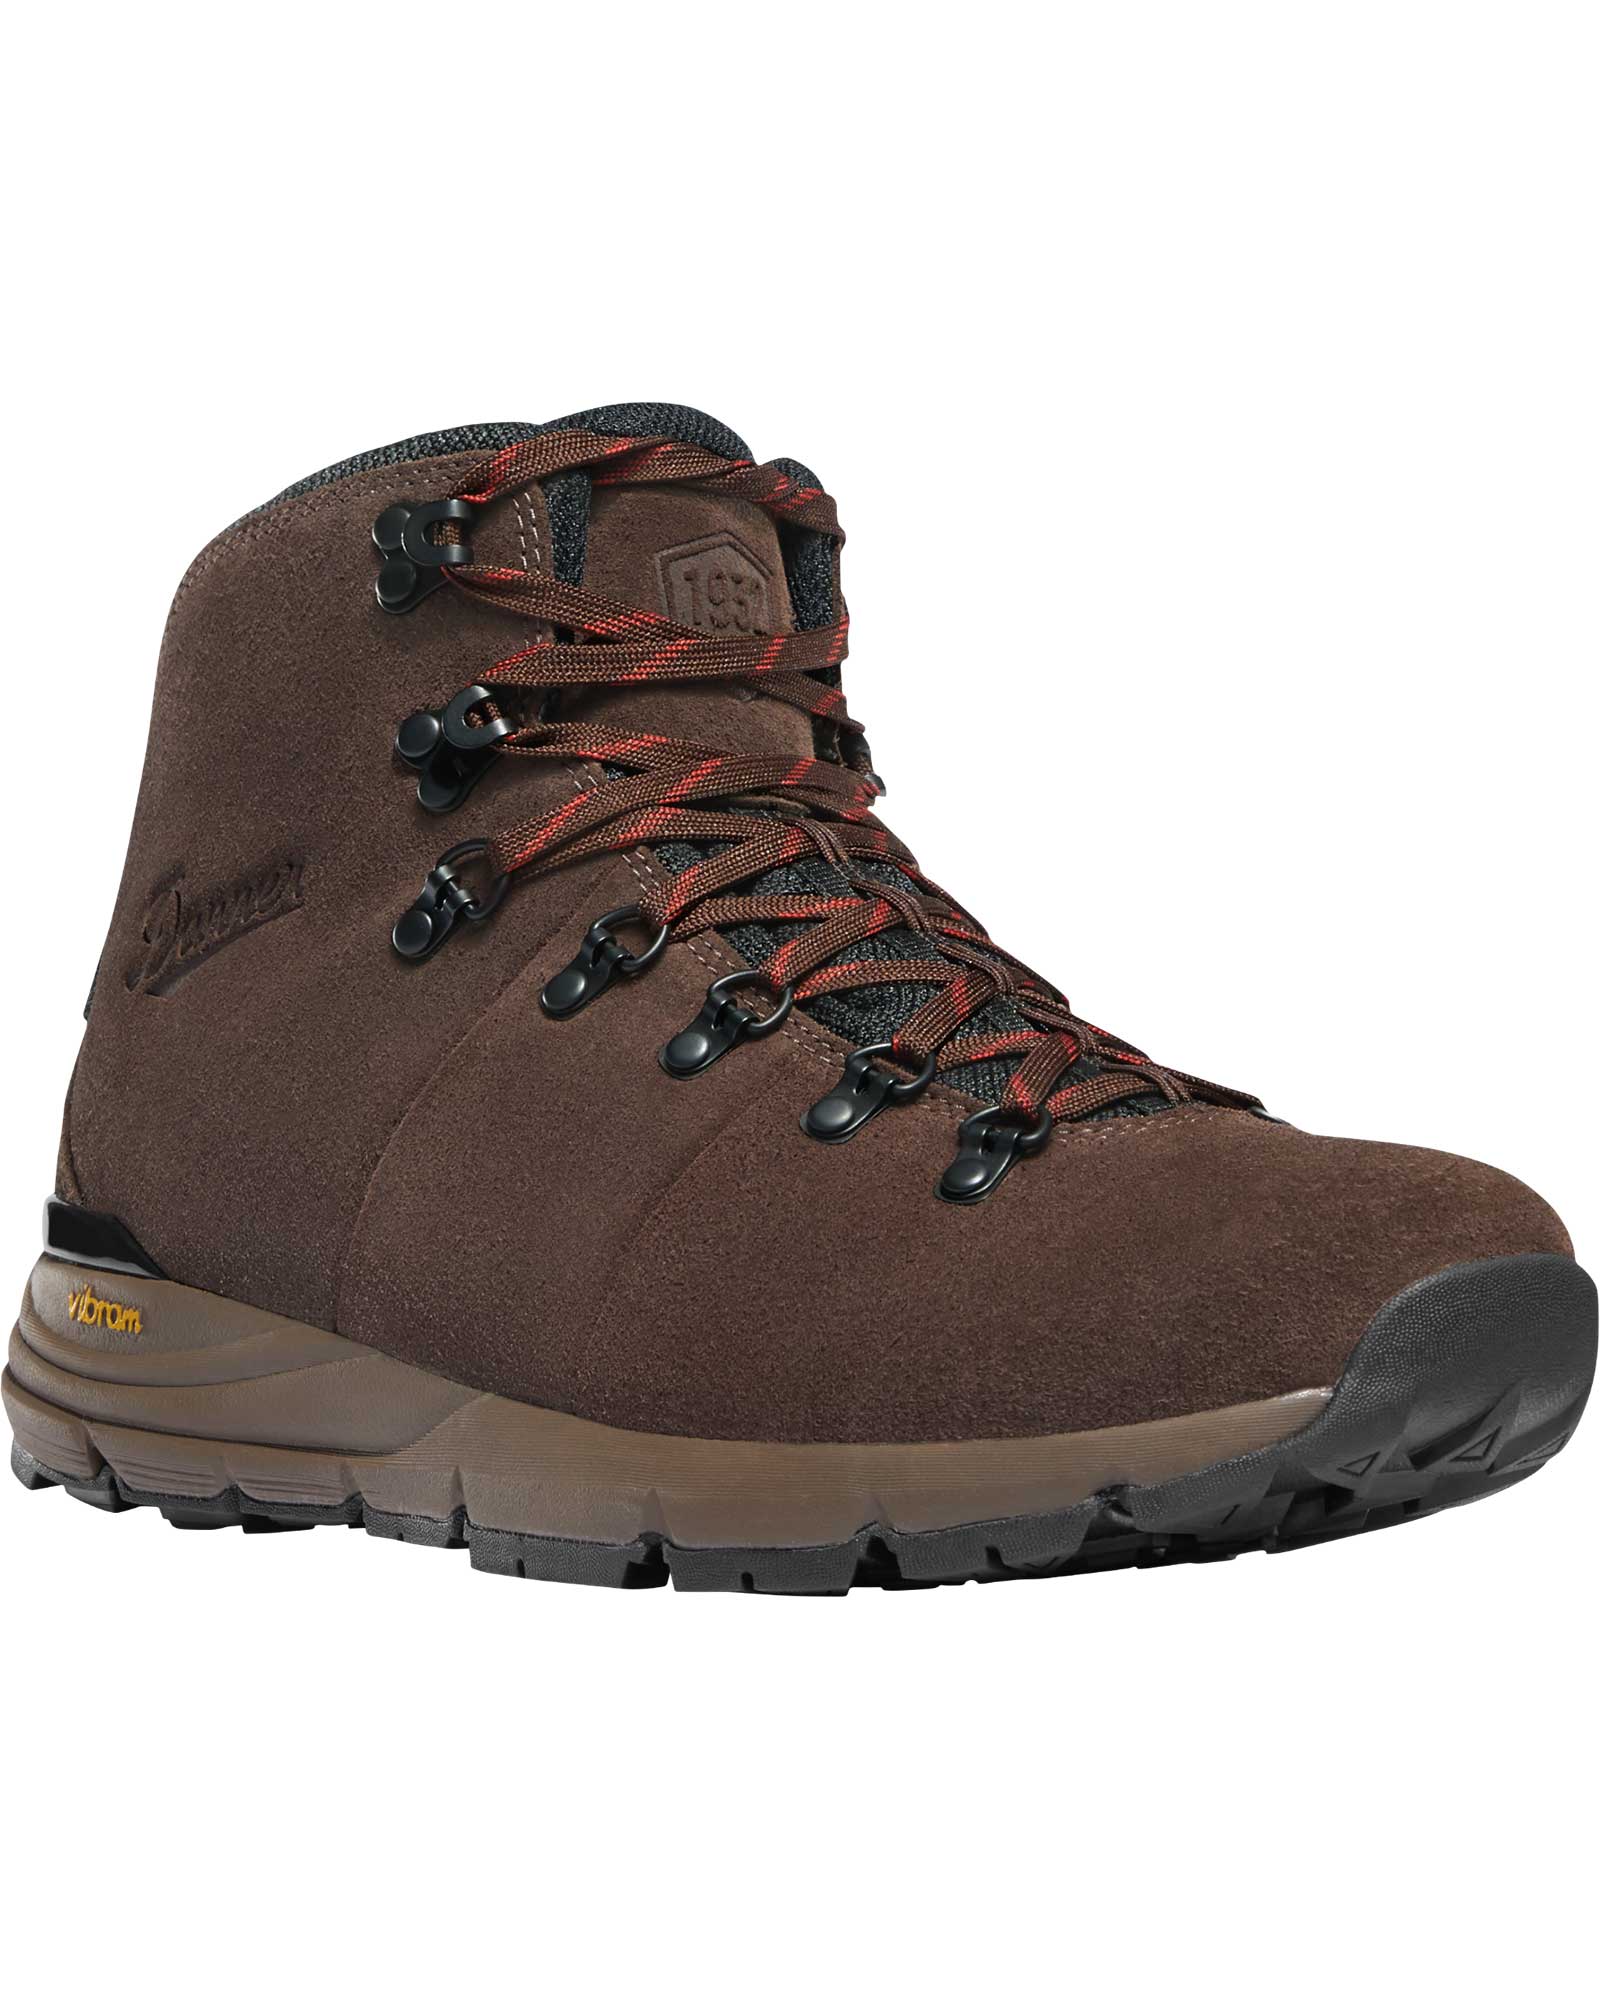 Danner Men’s Mountain 600 Boots - Java/Bossa Nova UK 10.5